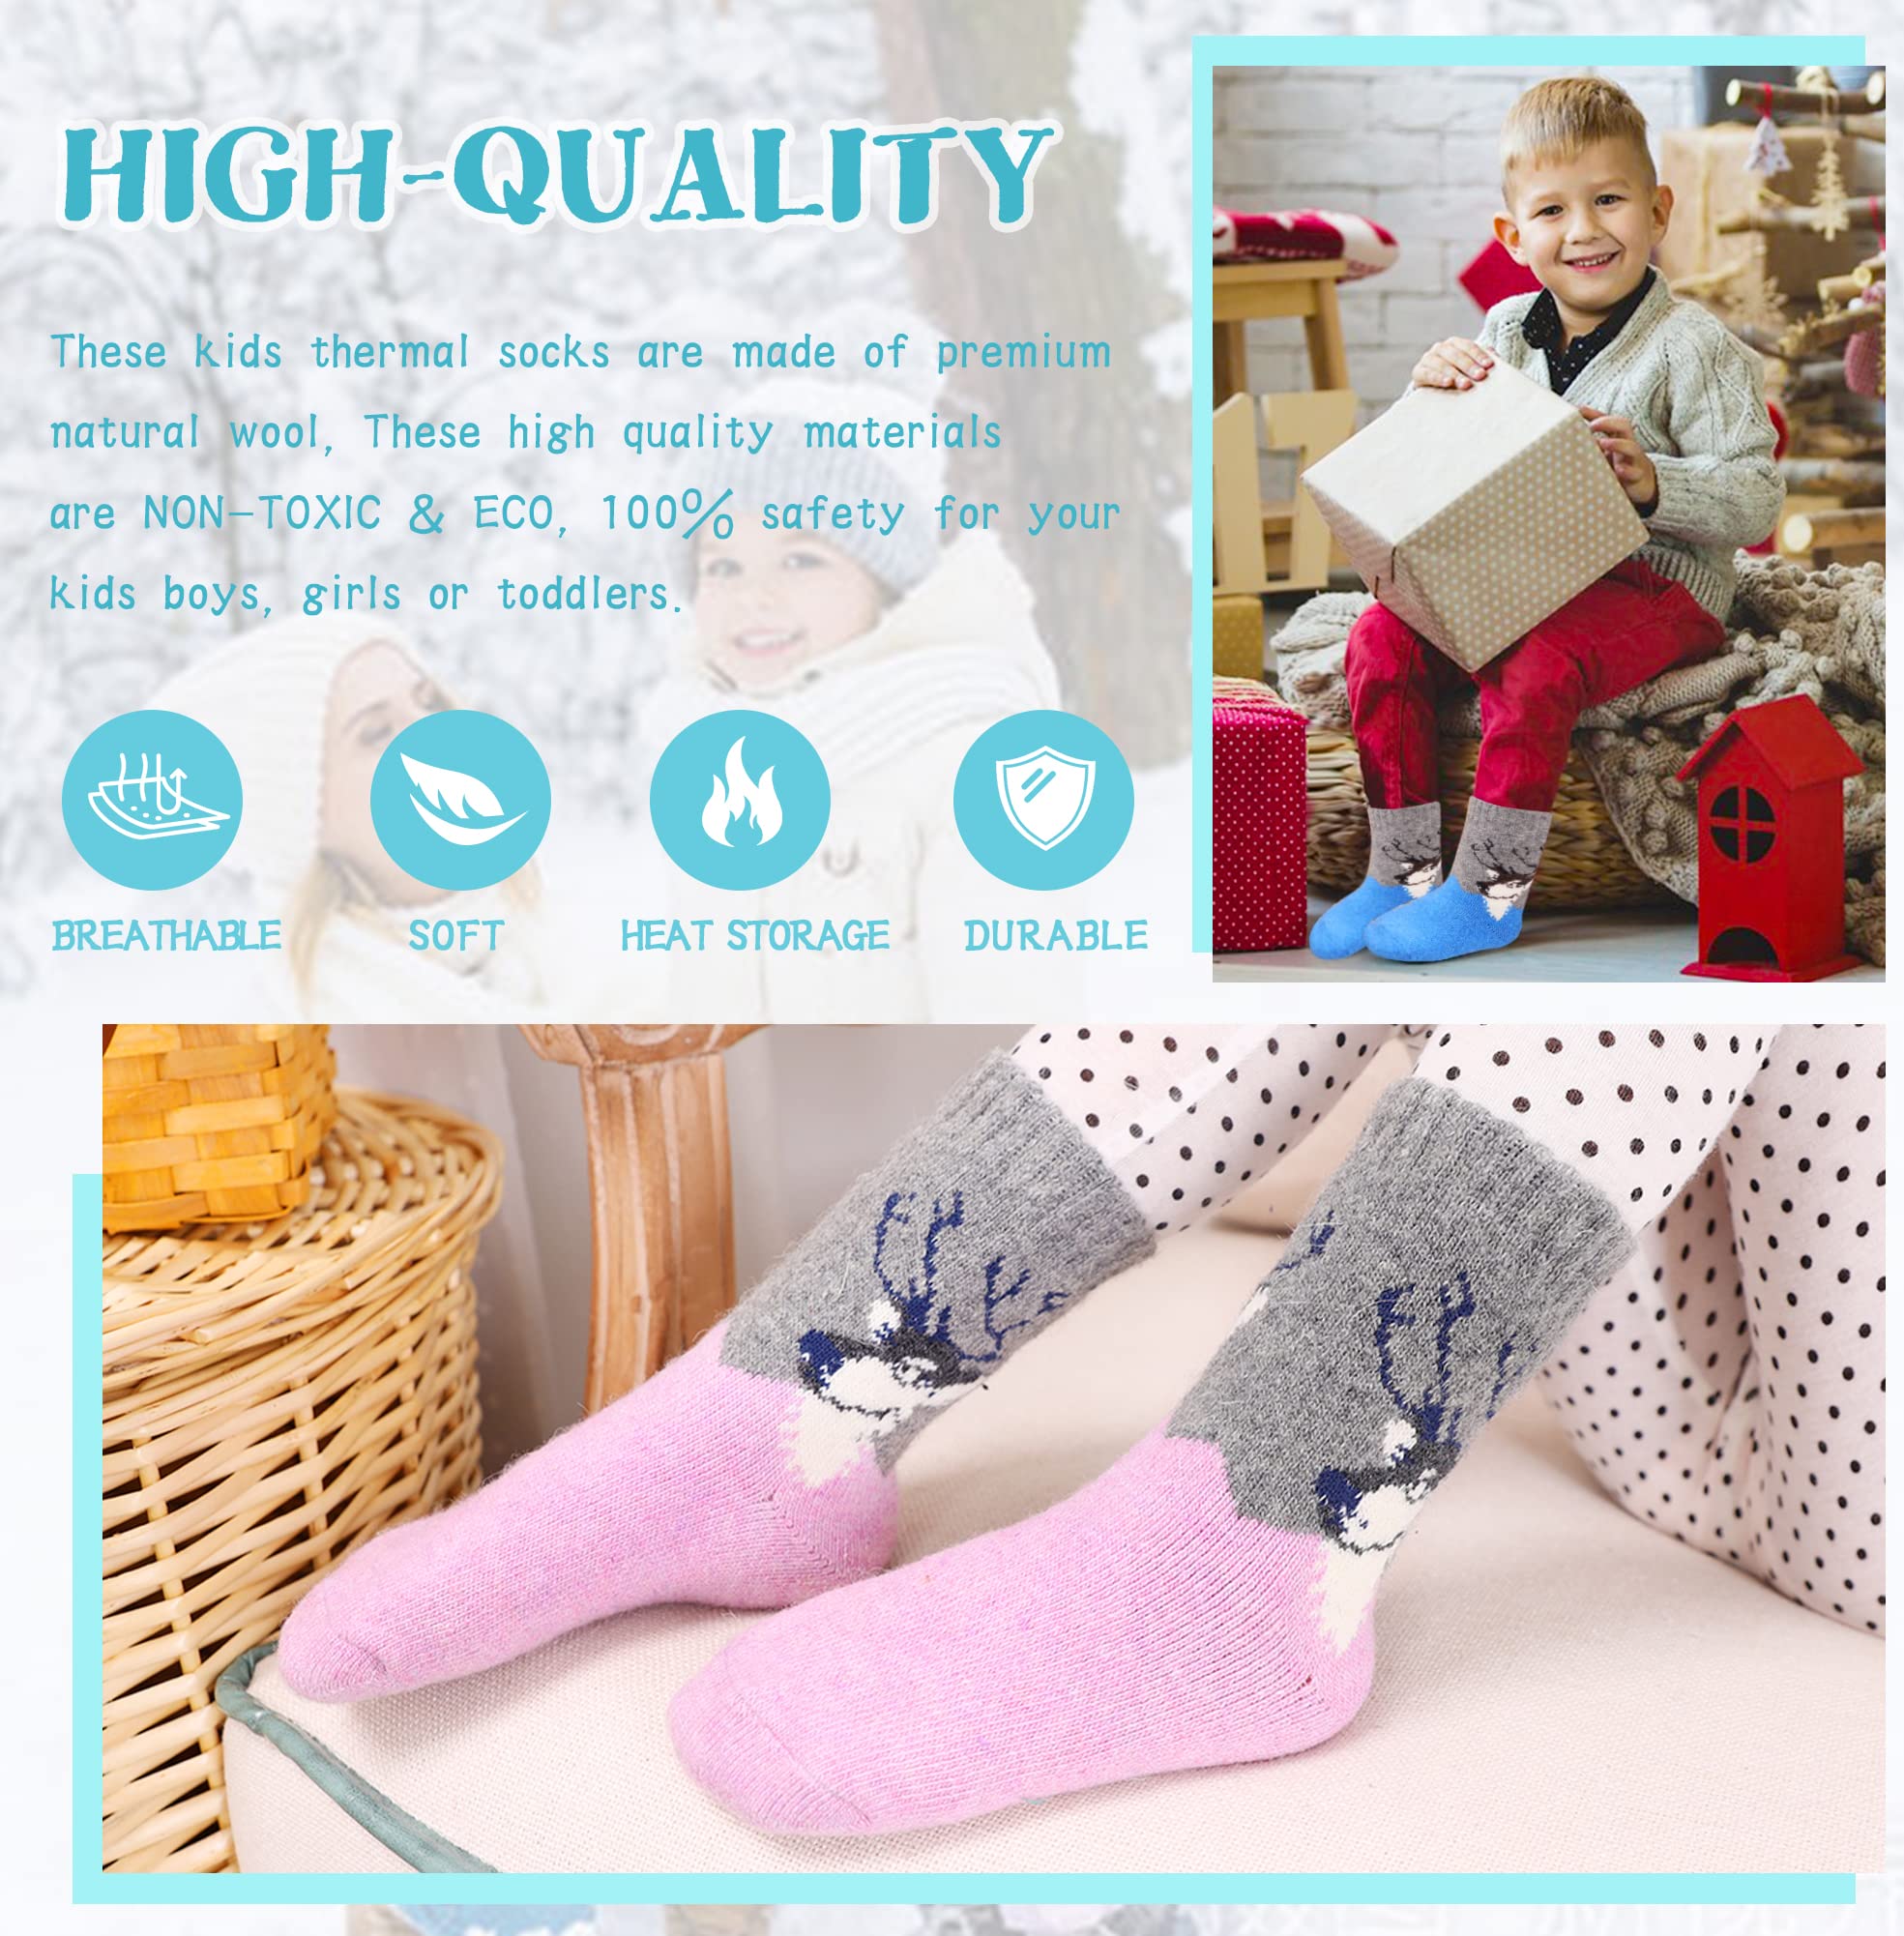 Eocom Kids Wool Socks Winter Warm Wool Hiking Thermal Thick Boot Cozy Crew Socks for Toddlers Boys Girls 6 Pairs